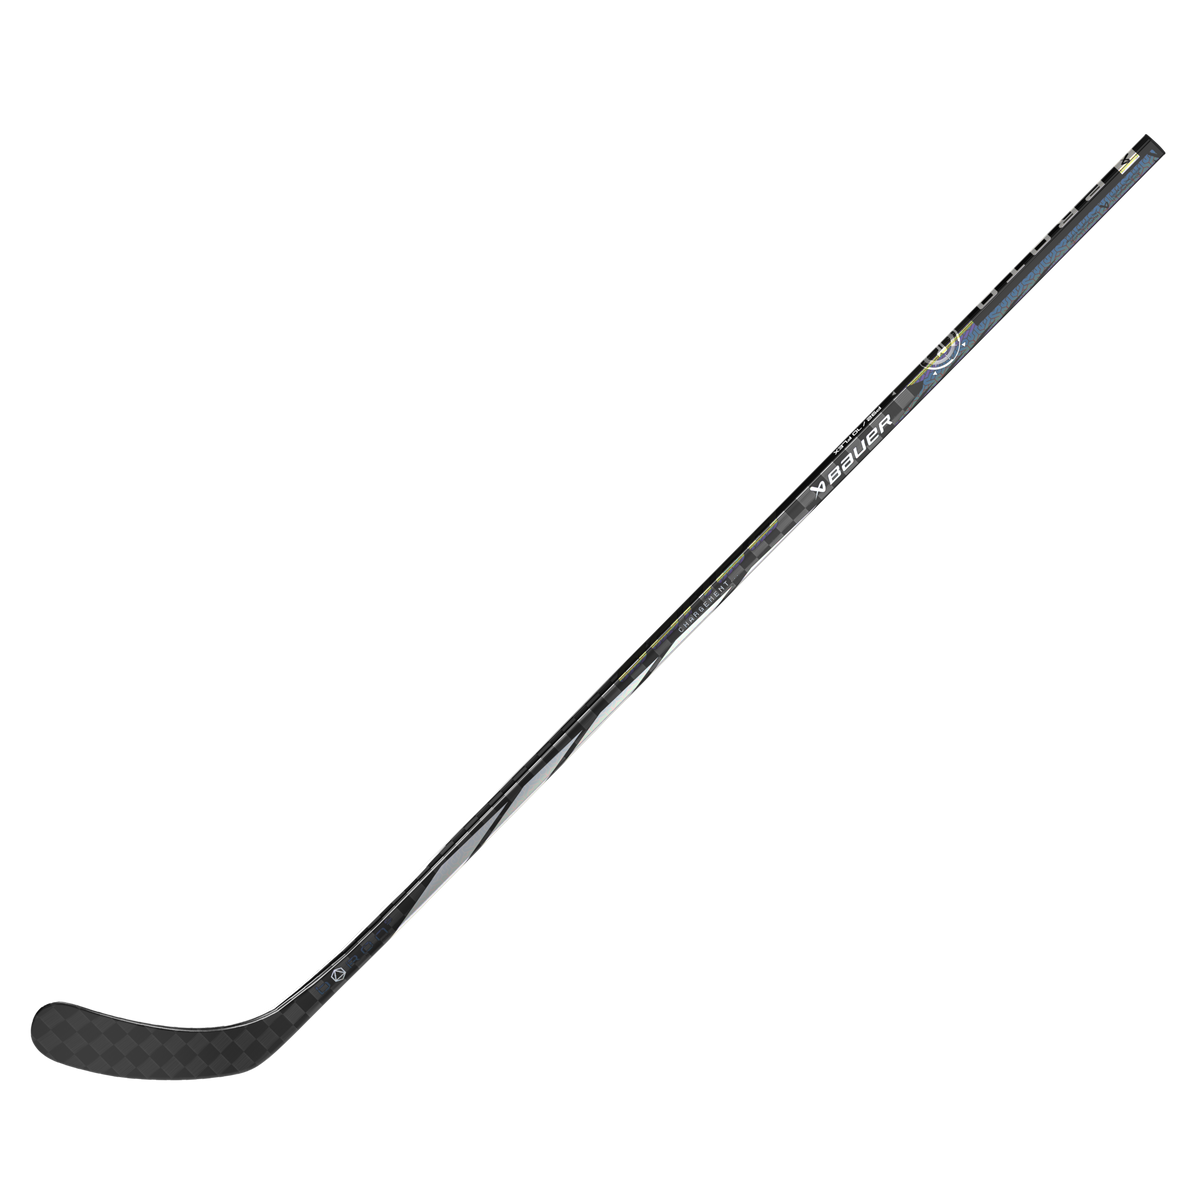 Bauer Proto-R Intermediate Hockey Stick